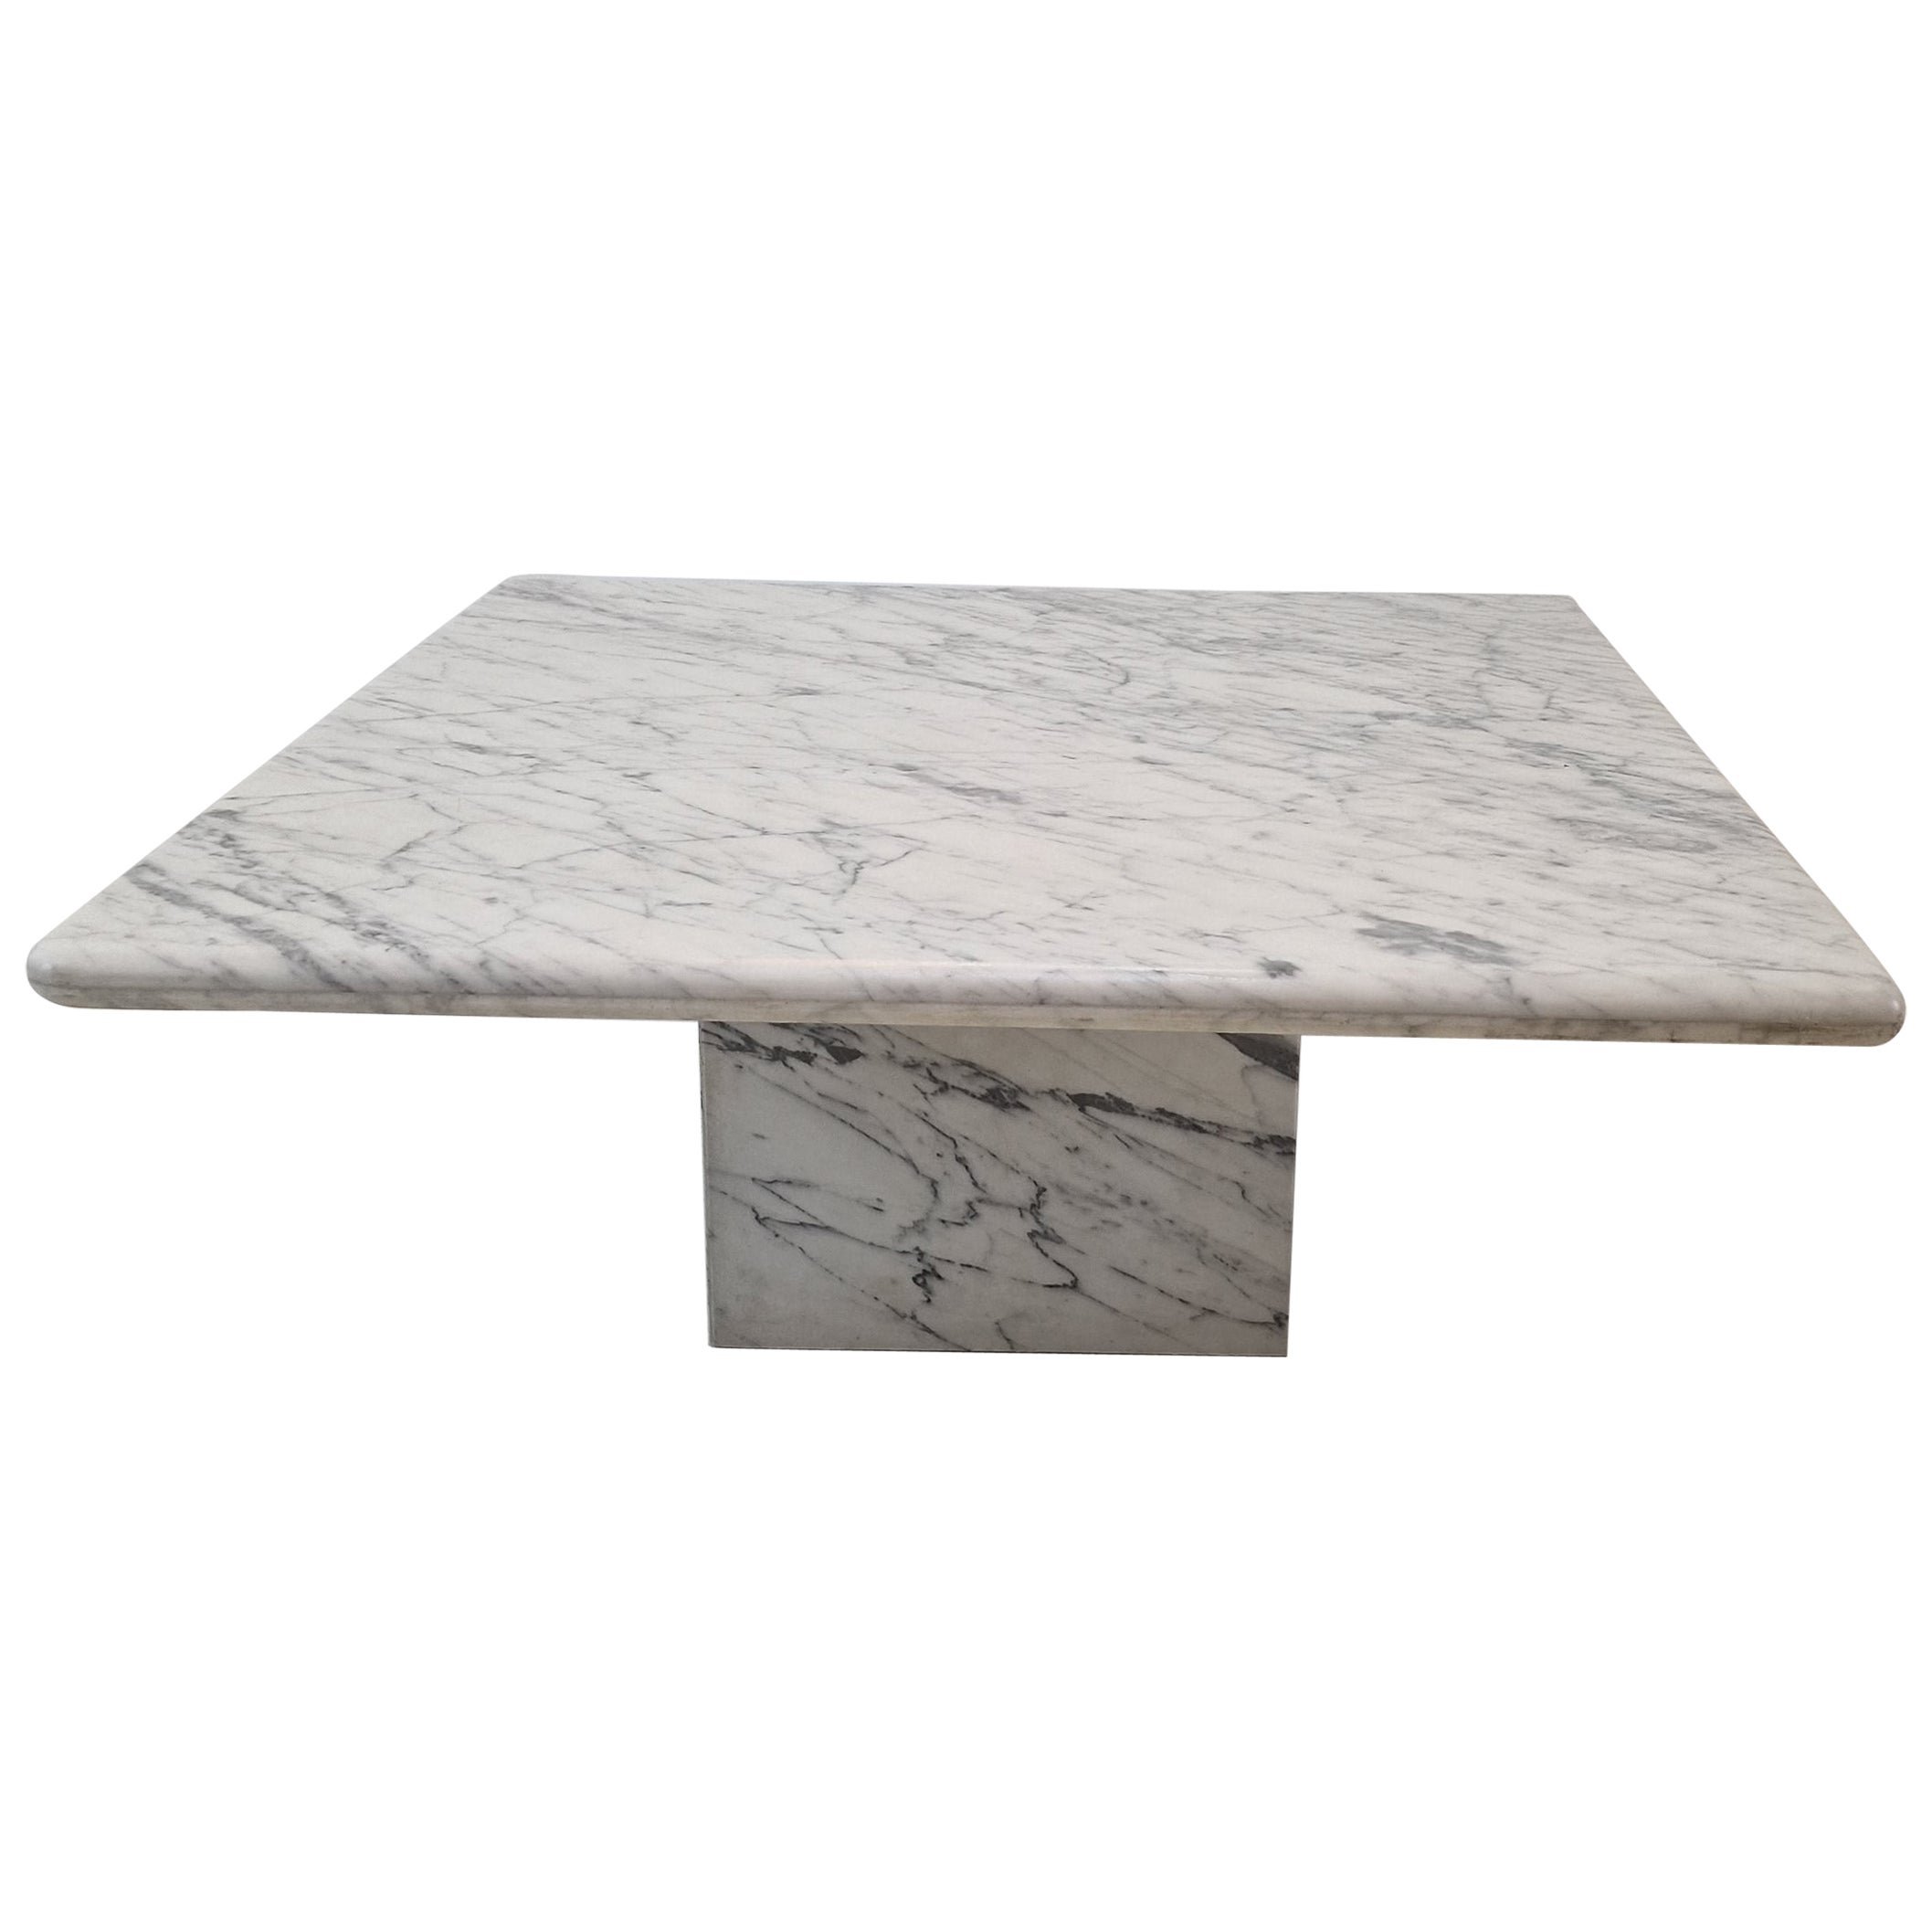 Italian Carrara Marble Coffee Table, 1980s